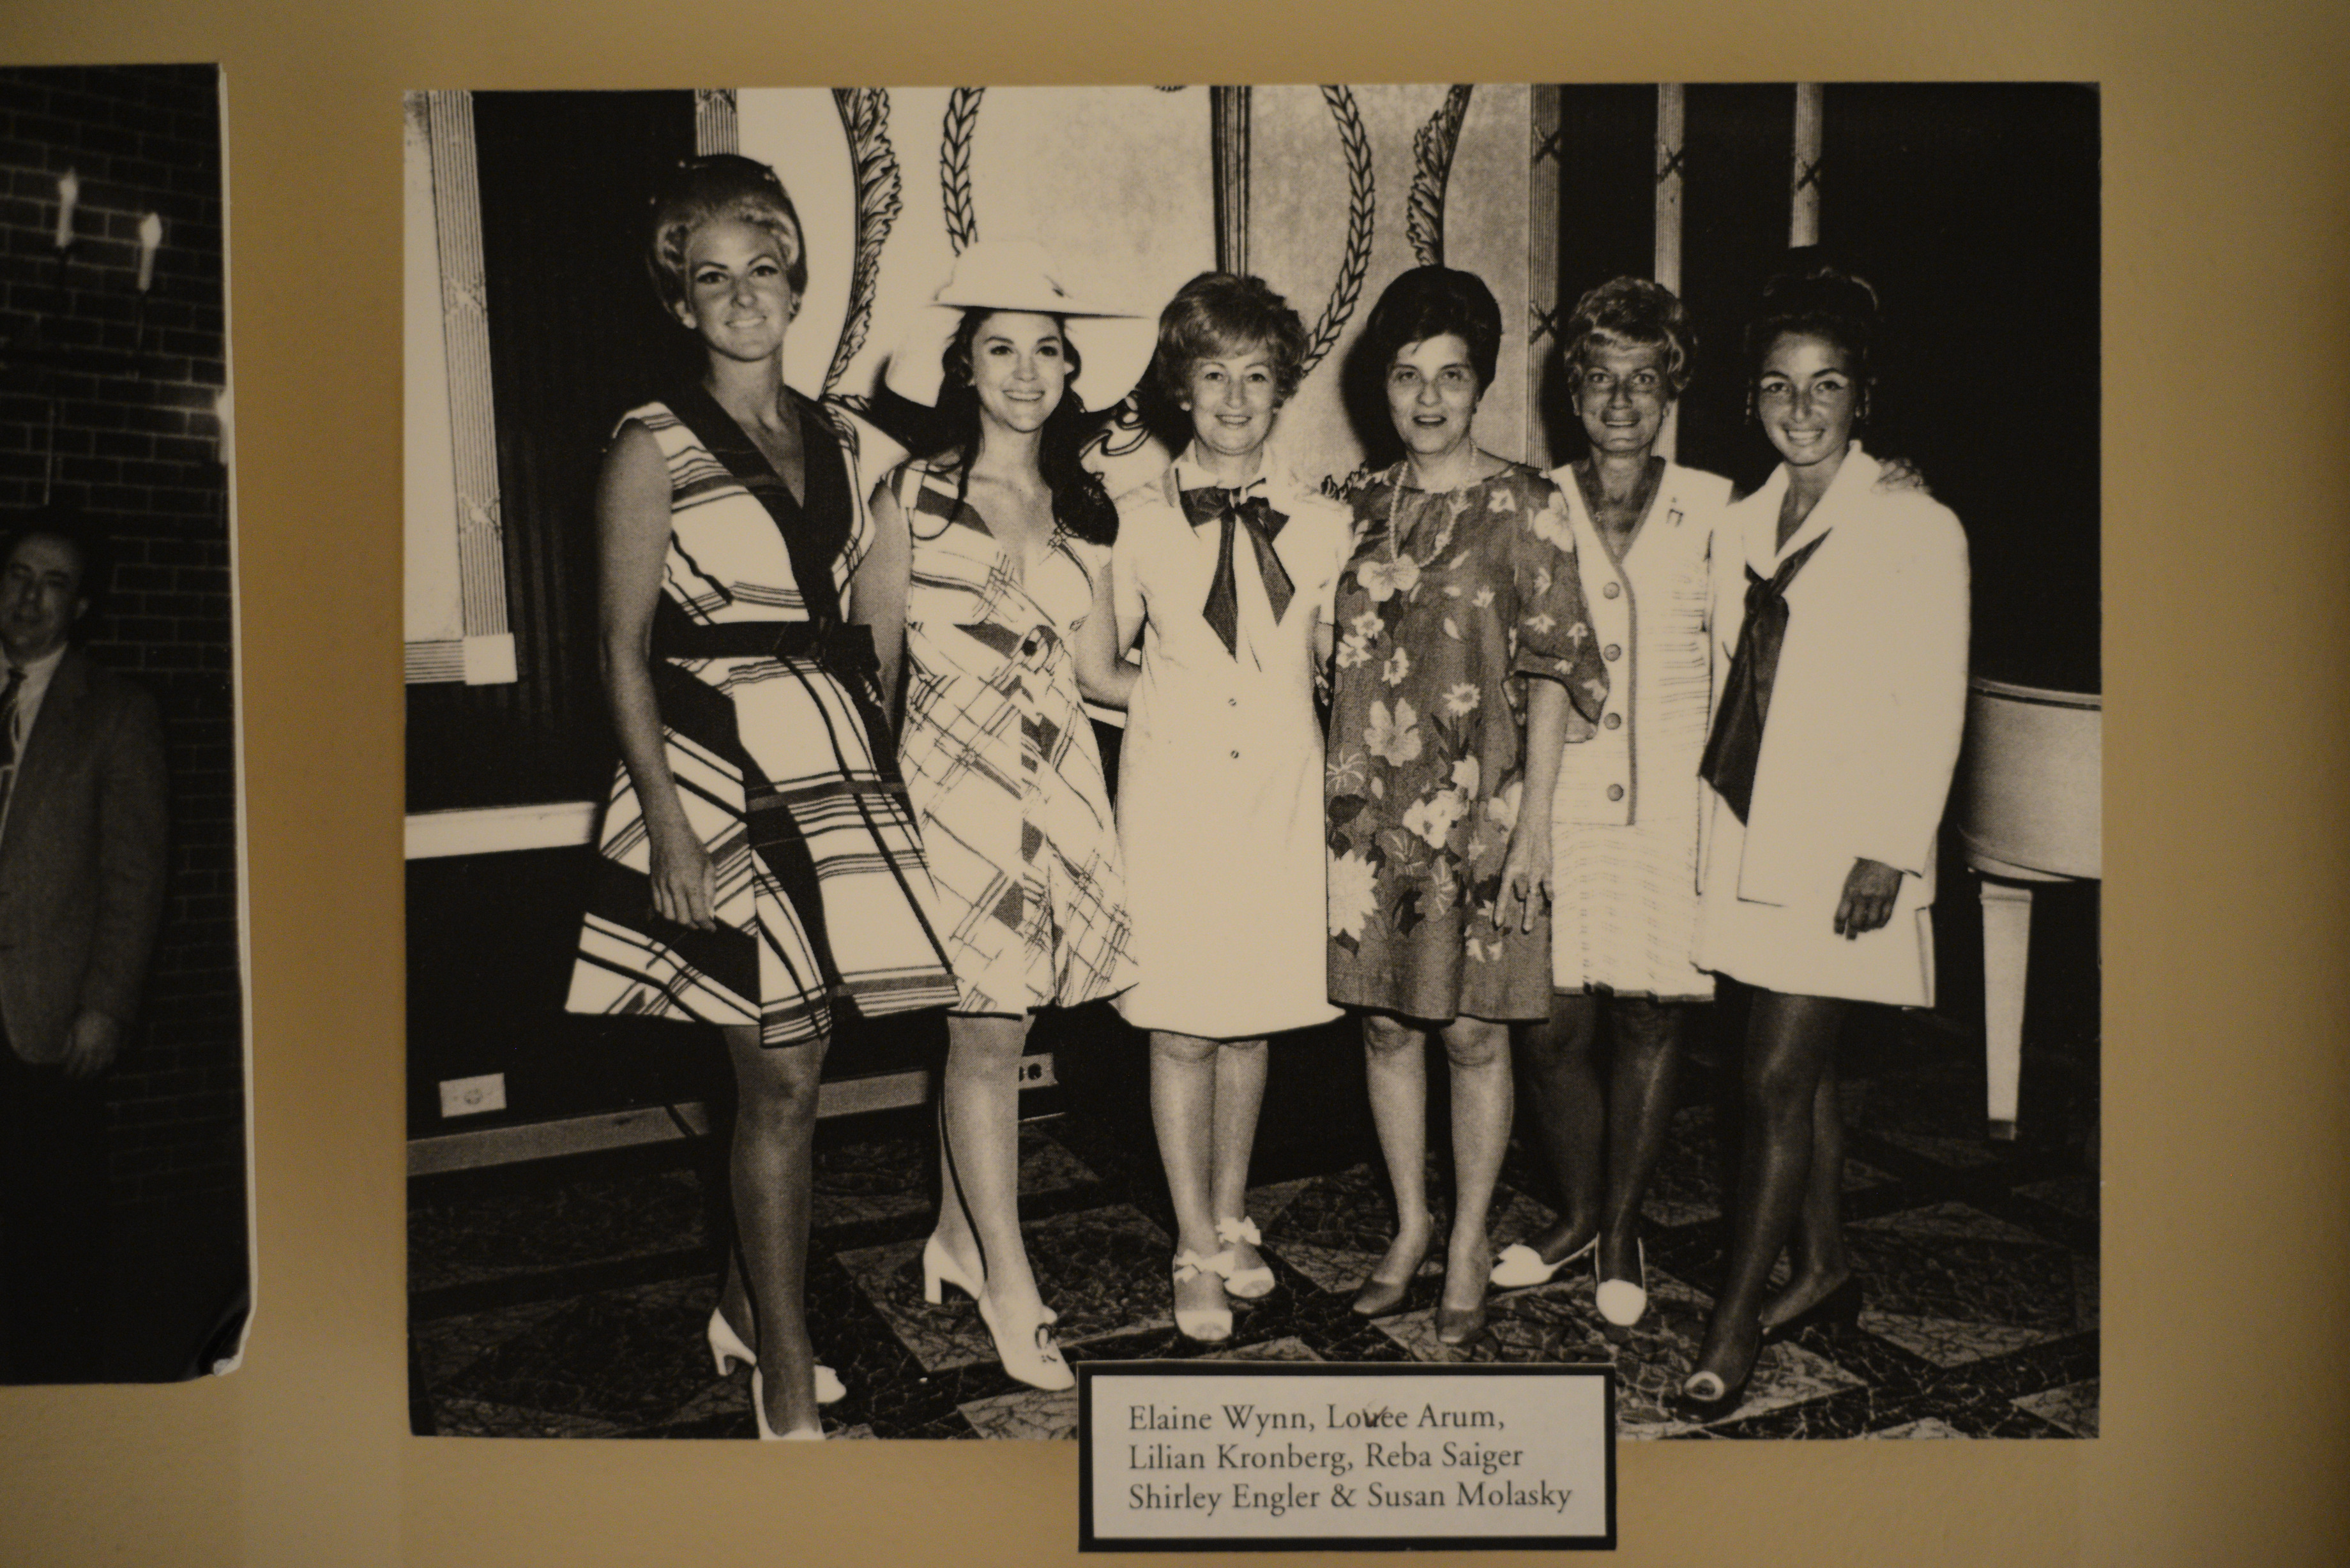 Photograph of Elaine Wynn, Lovee Arum, Lillian Kronberg, Reba Saiger, Shirley Engler and Susan Molasky, date unknown